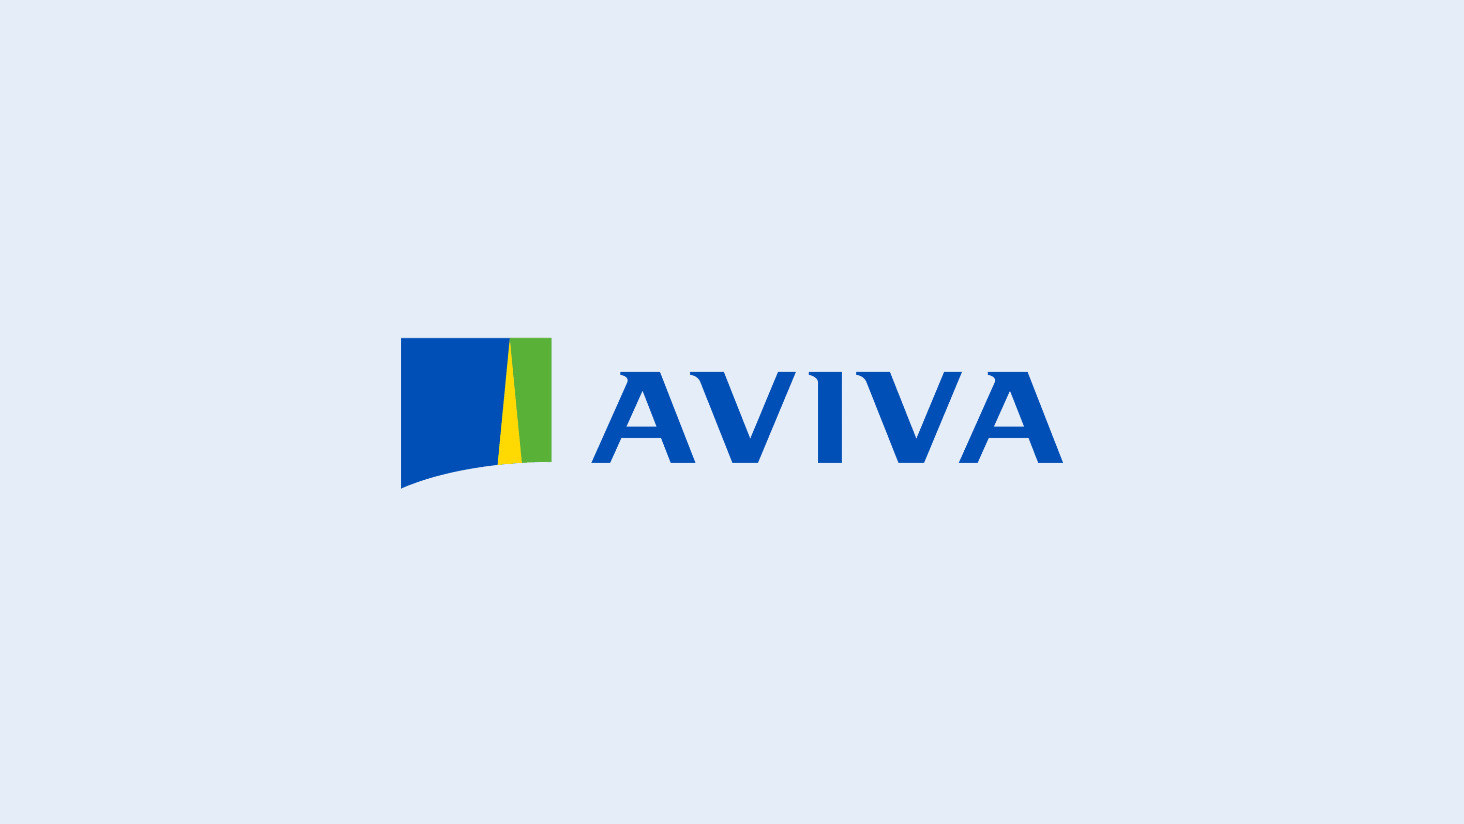 AVIVA plc